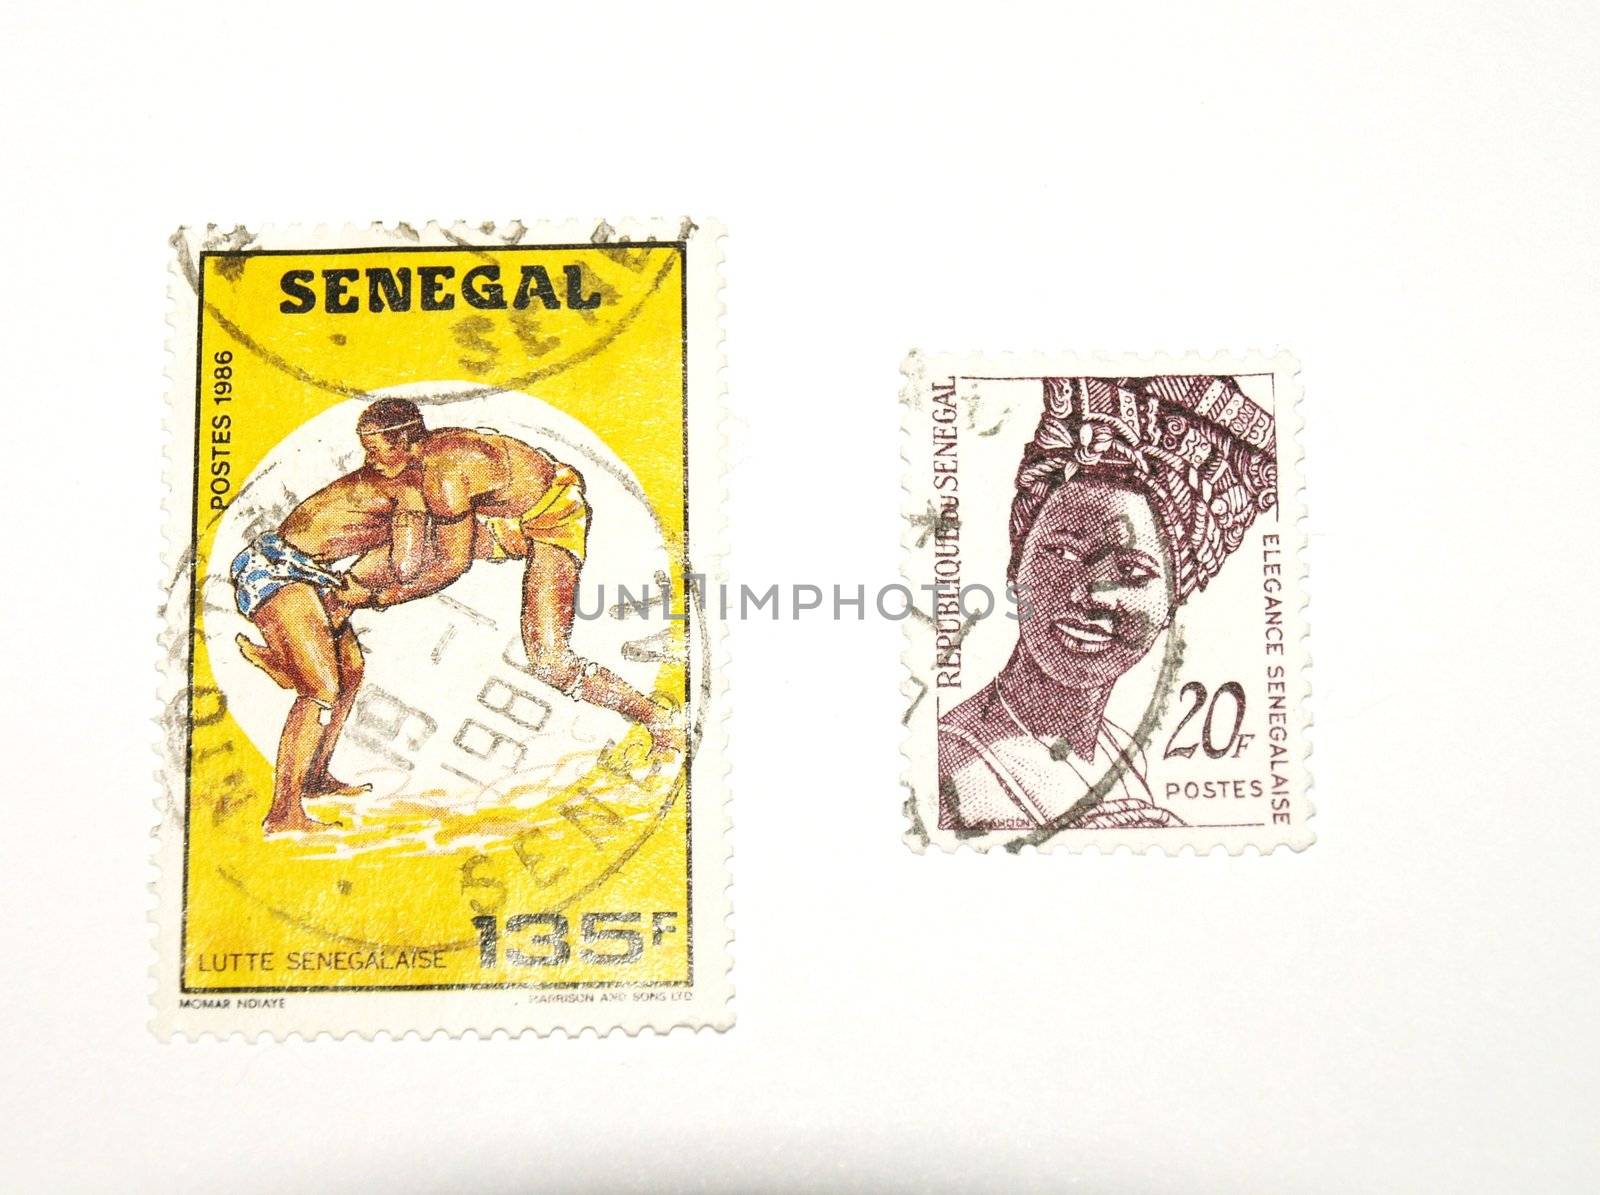 senegal stamps by viviolsen